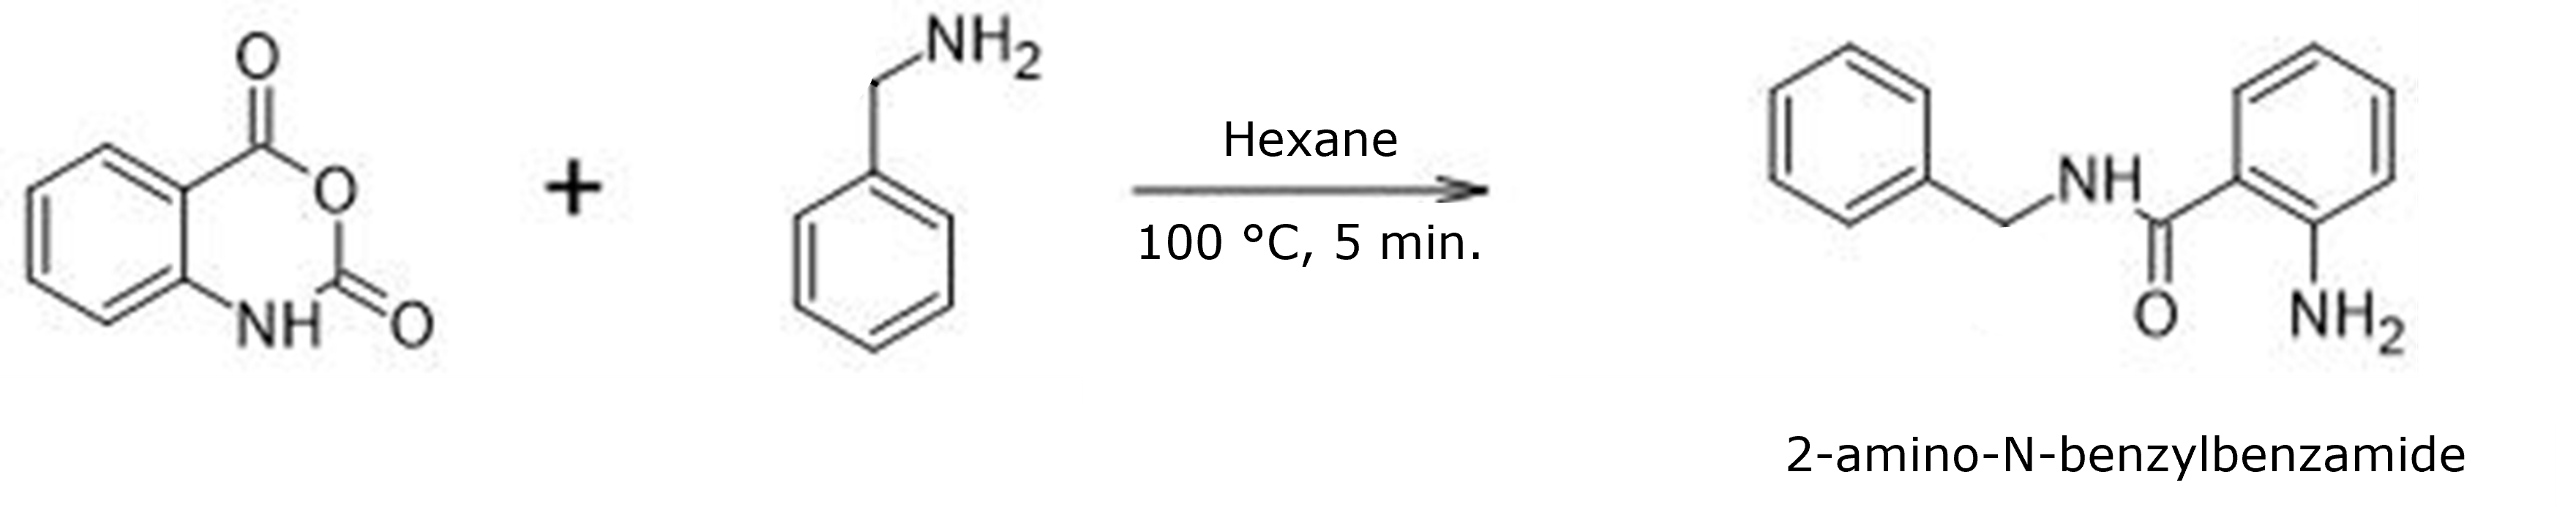 IA+BA reaction 100C, 5 min hexane